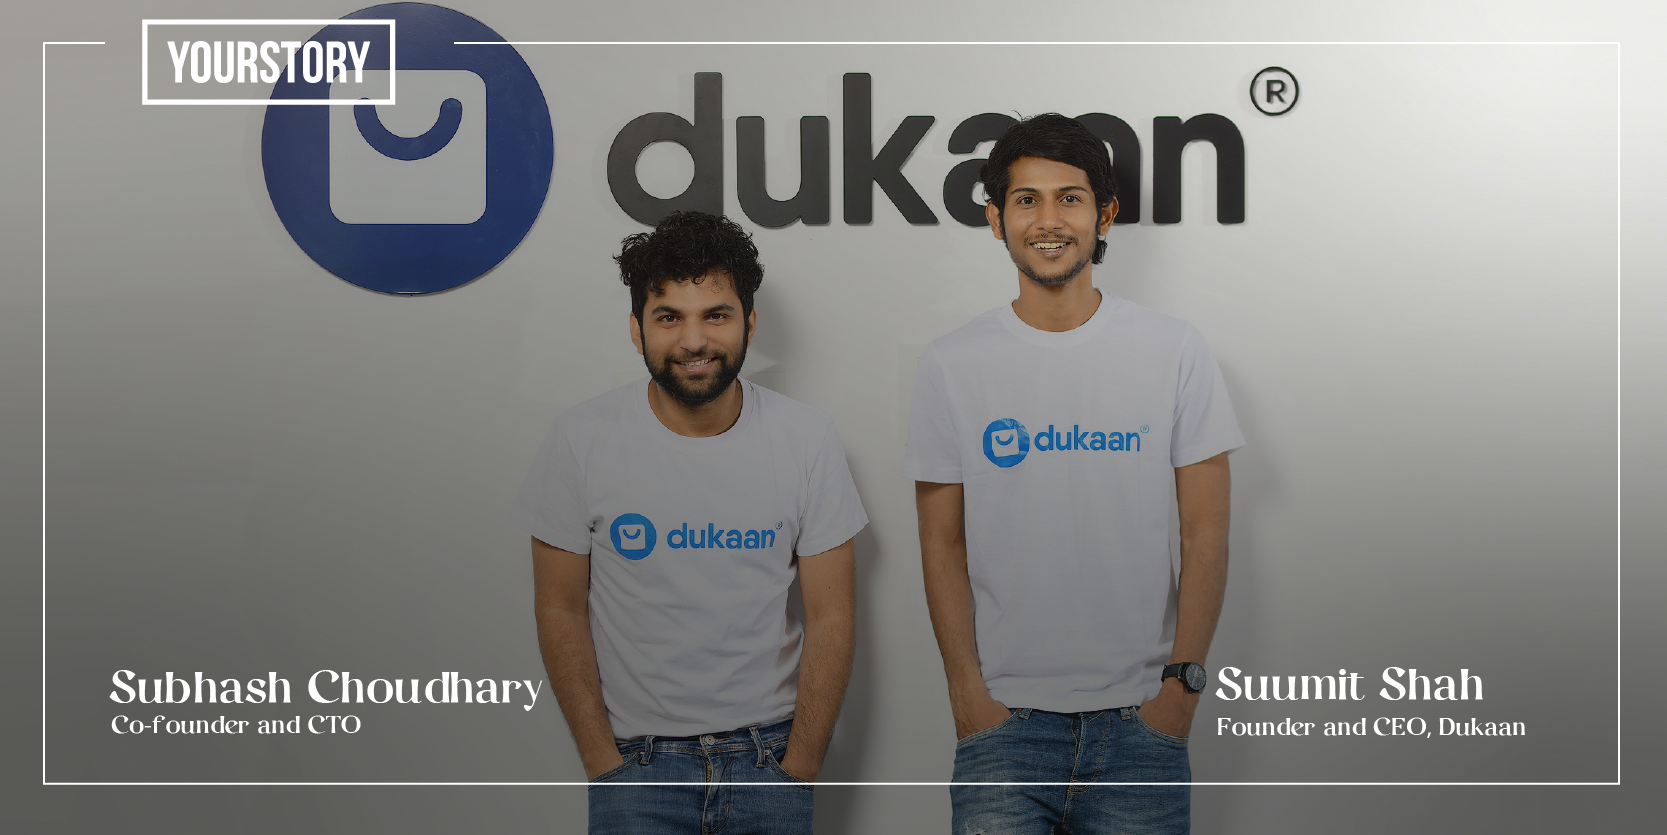 [Funding alert] Online retail platform Dukaan raises $11M in pre Series A round